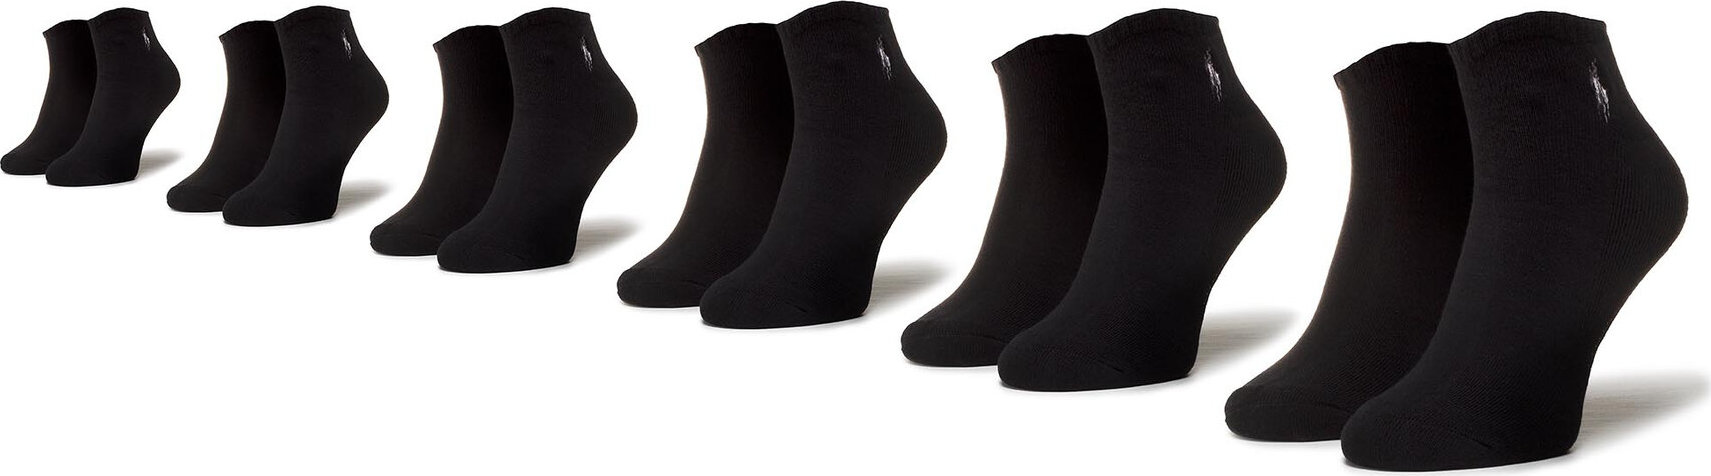 Sada 6 párů dámských nízkých ponožek Polo Ralph Lauren 449723765001 R. Os Black 001